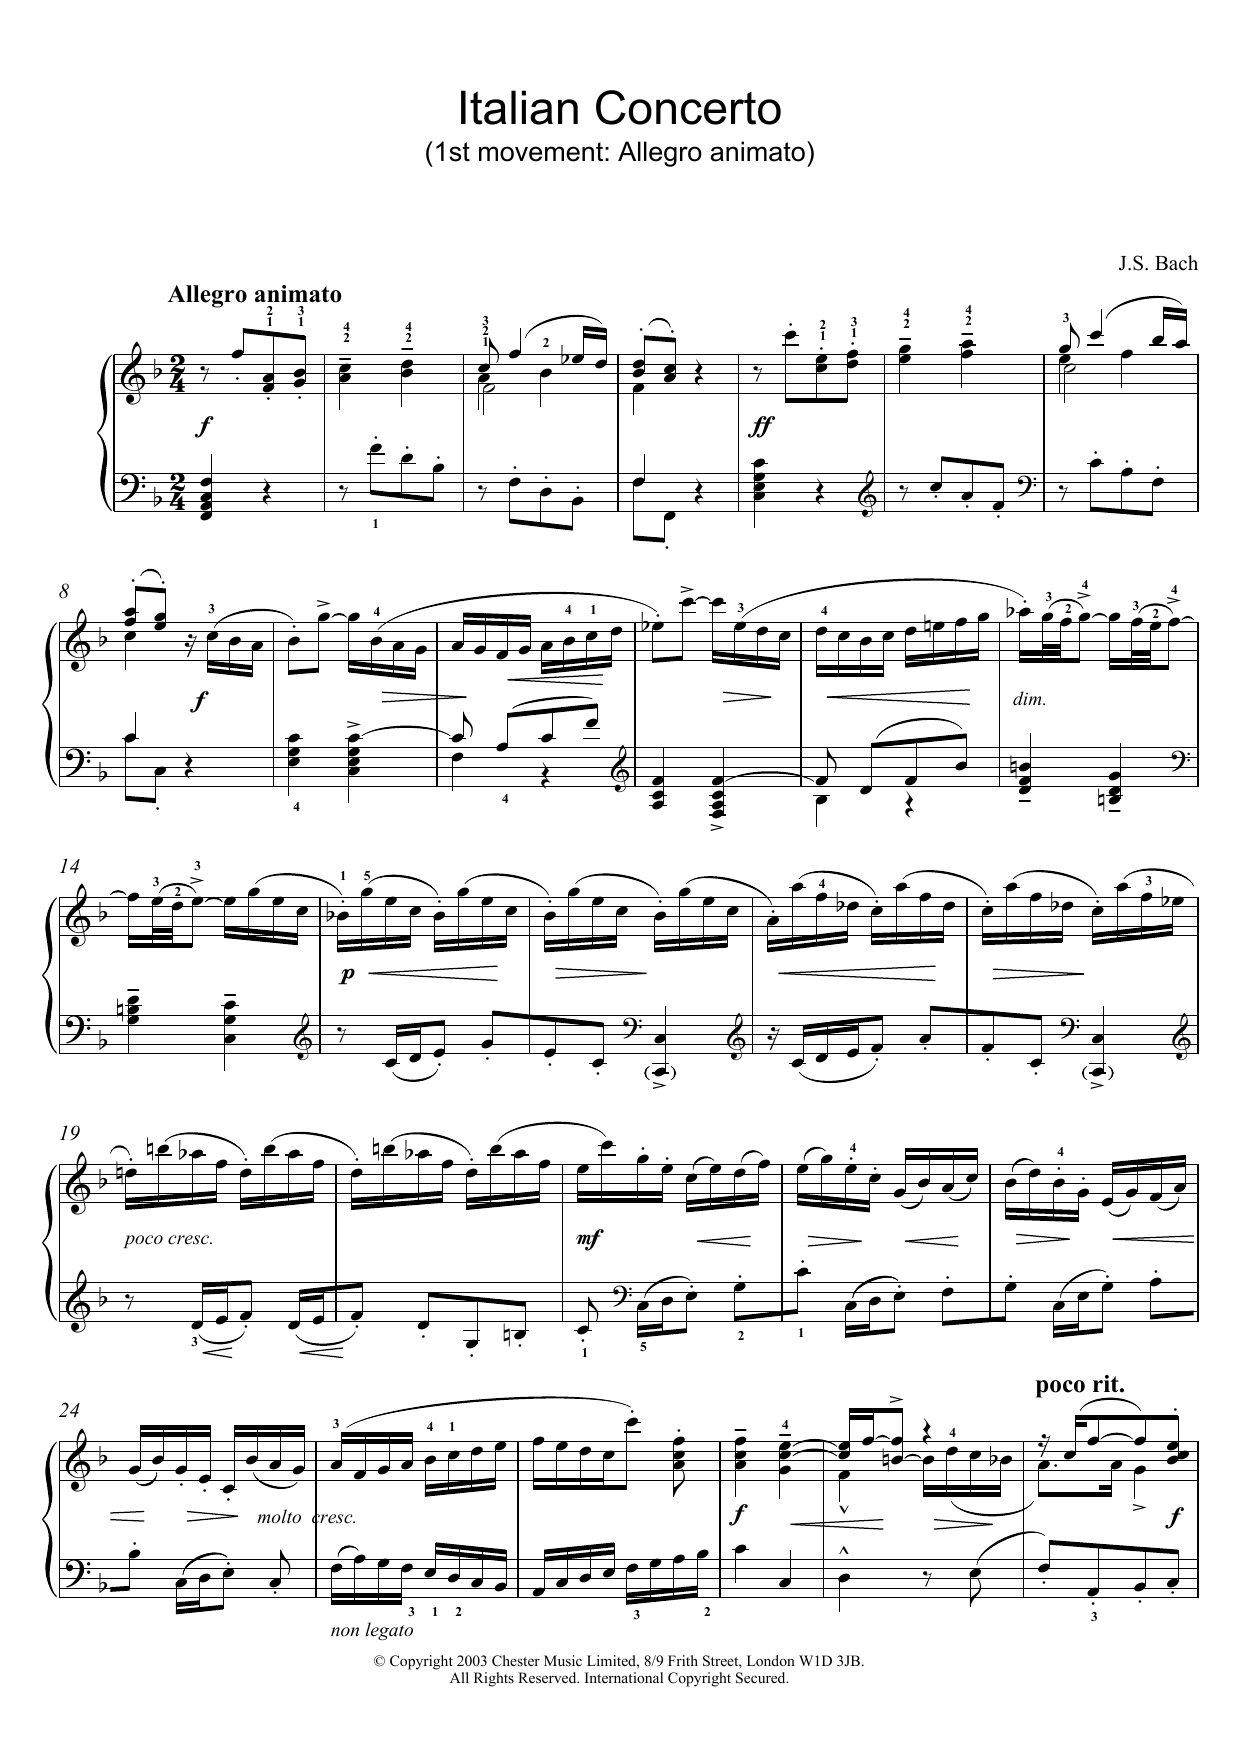 Johann Sebastian Bach Italian Concerto (1st movement: Allegro animato) Sheet Music Notes & Chords for Piano - Download or Print PDF